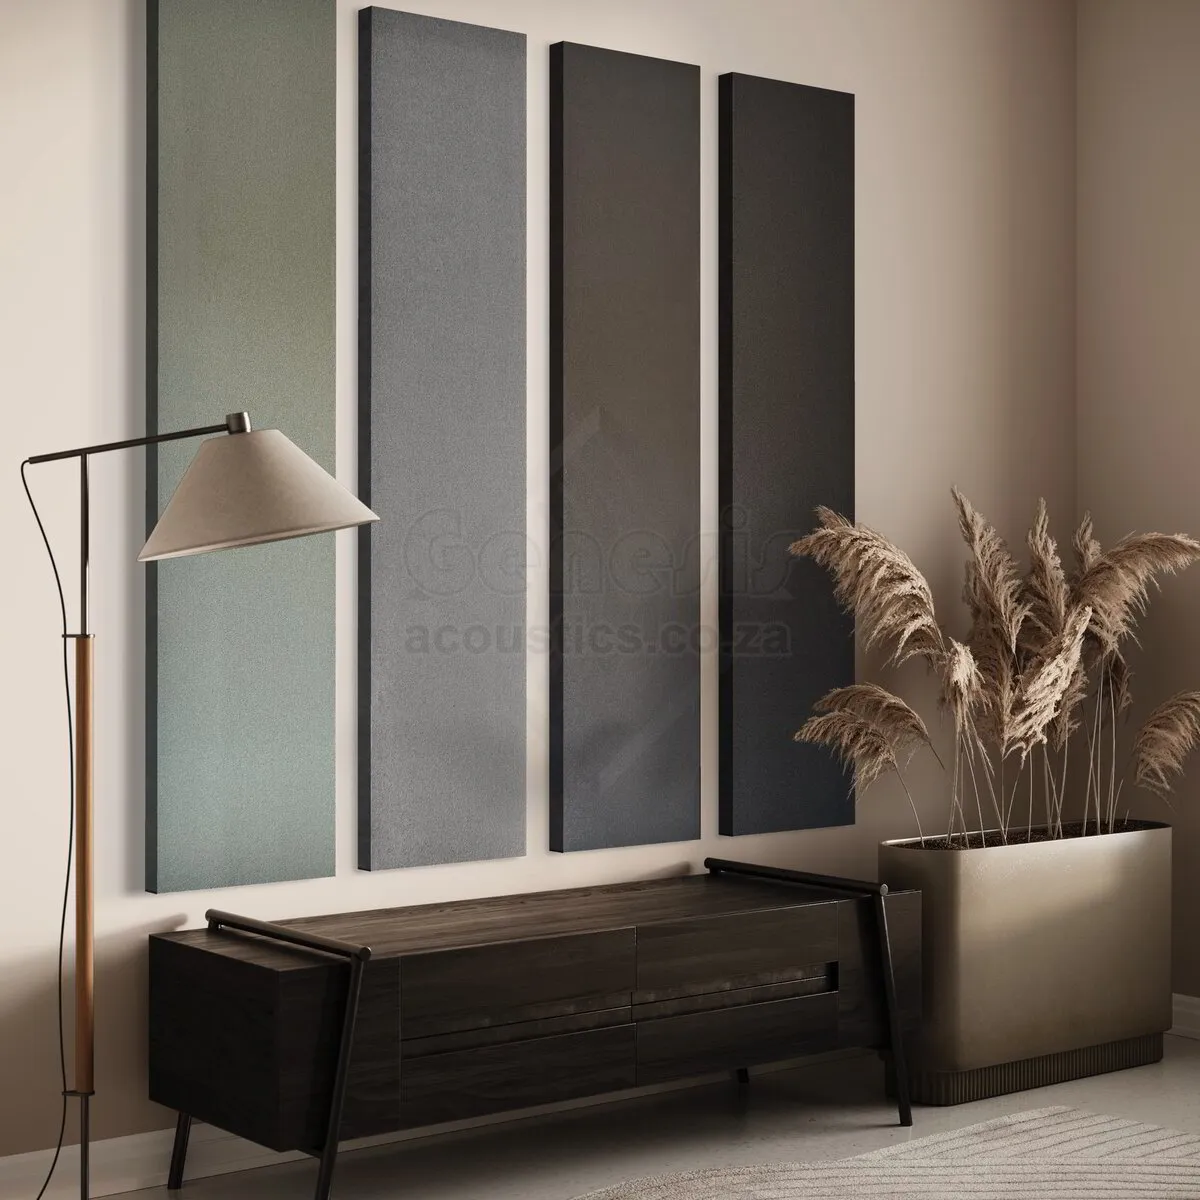 S5 Pro Acoustic Wall Panels - 180cm x 40cm Set of 4 - Steel Works Colour Combo